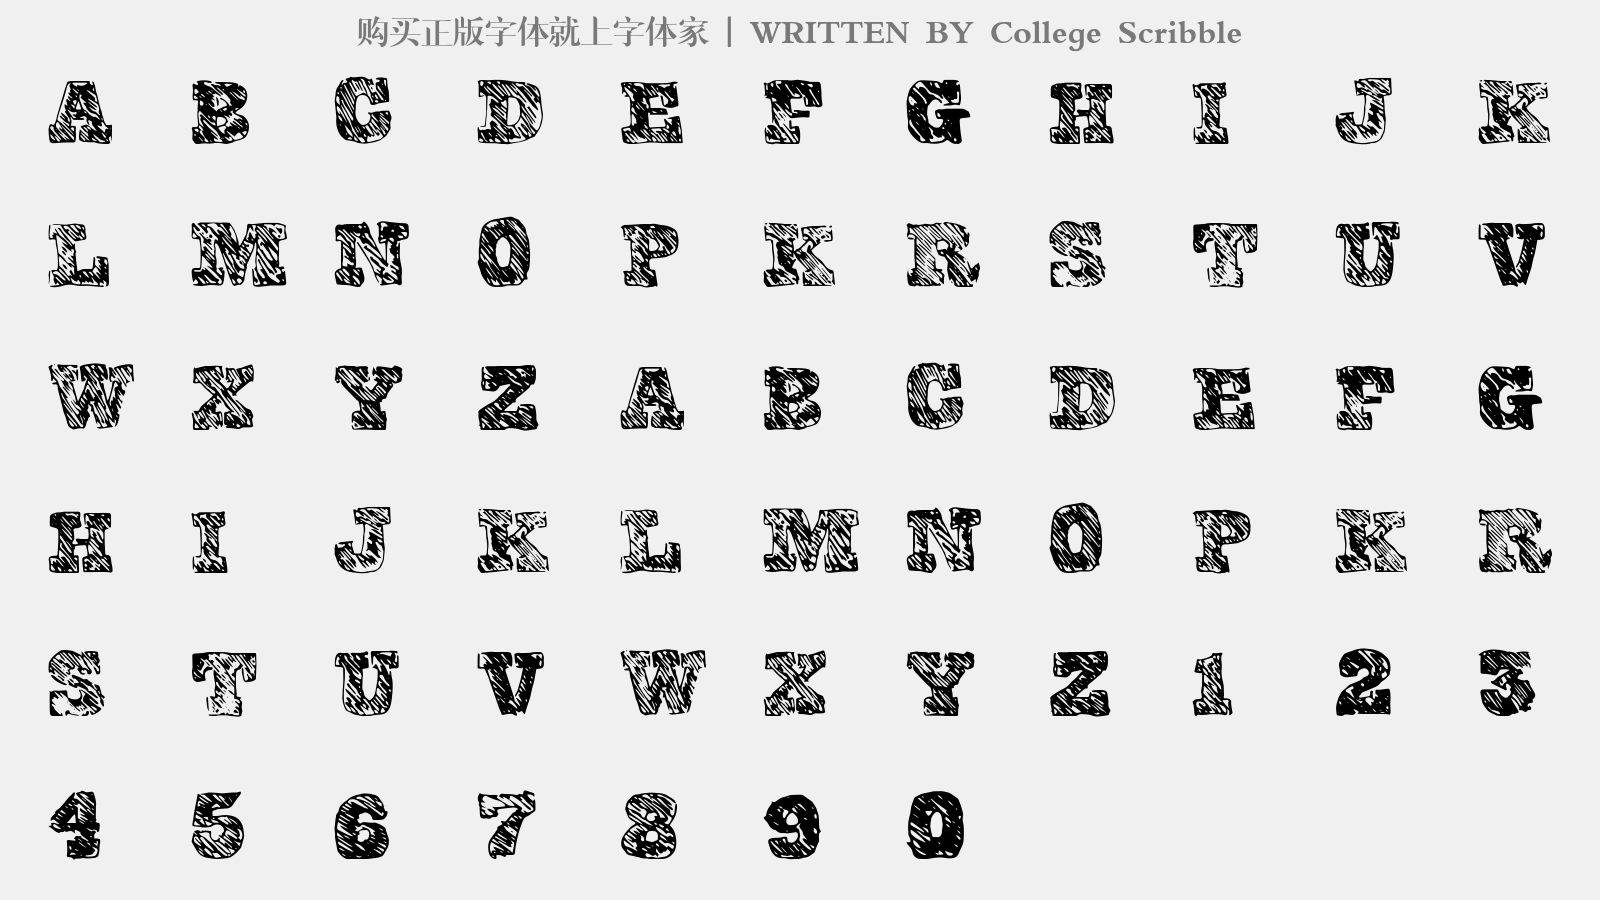 College Scribble - 大写字母/小写字母/数字